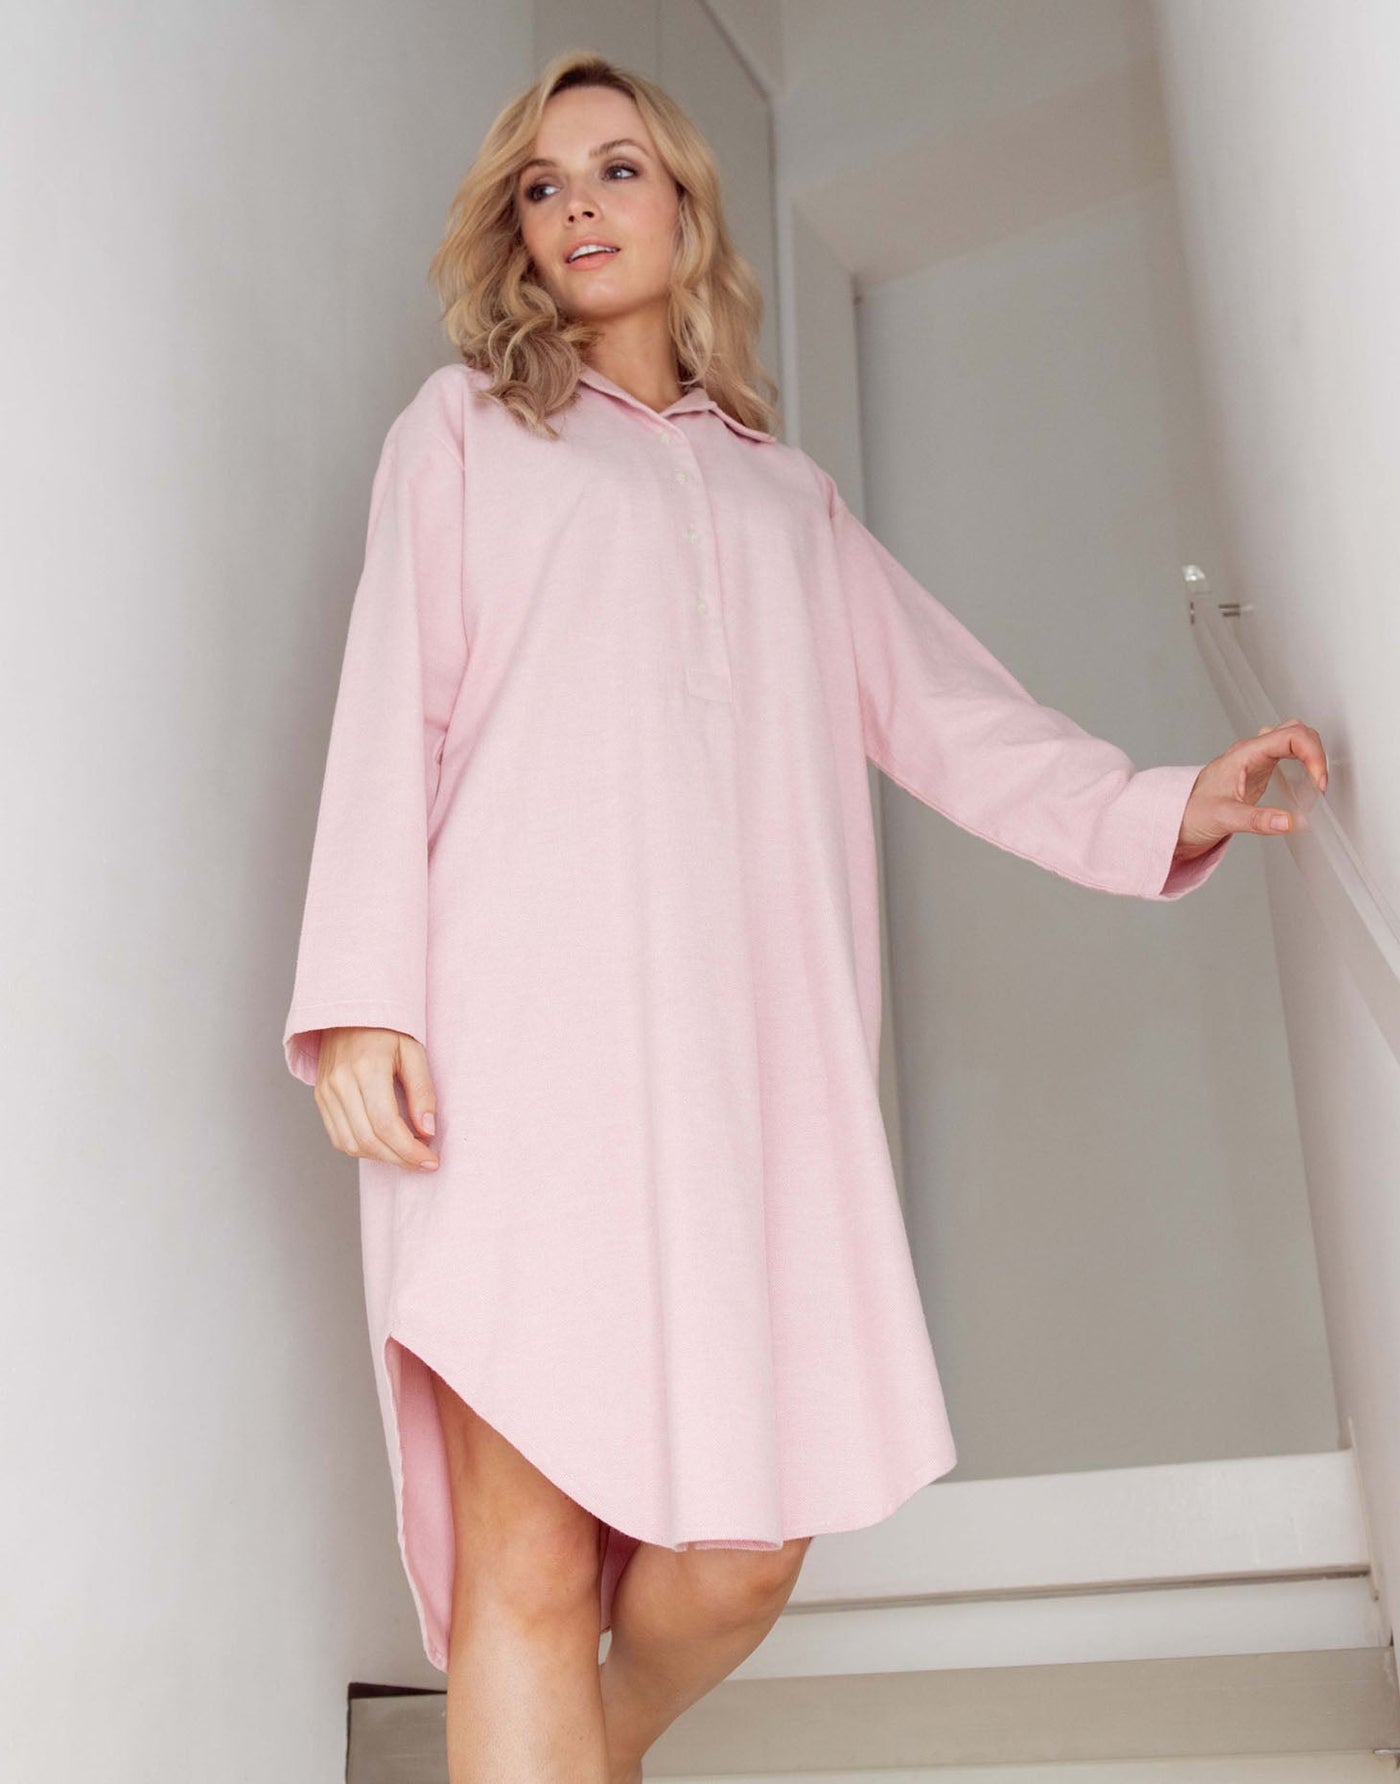 Women's Brushed Cotton Nightshirt – Powder Pink Herringbone